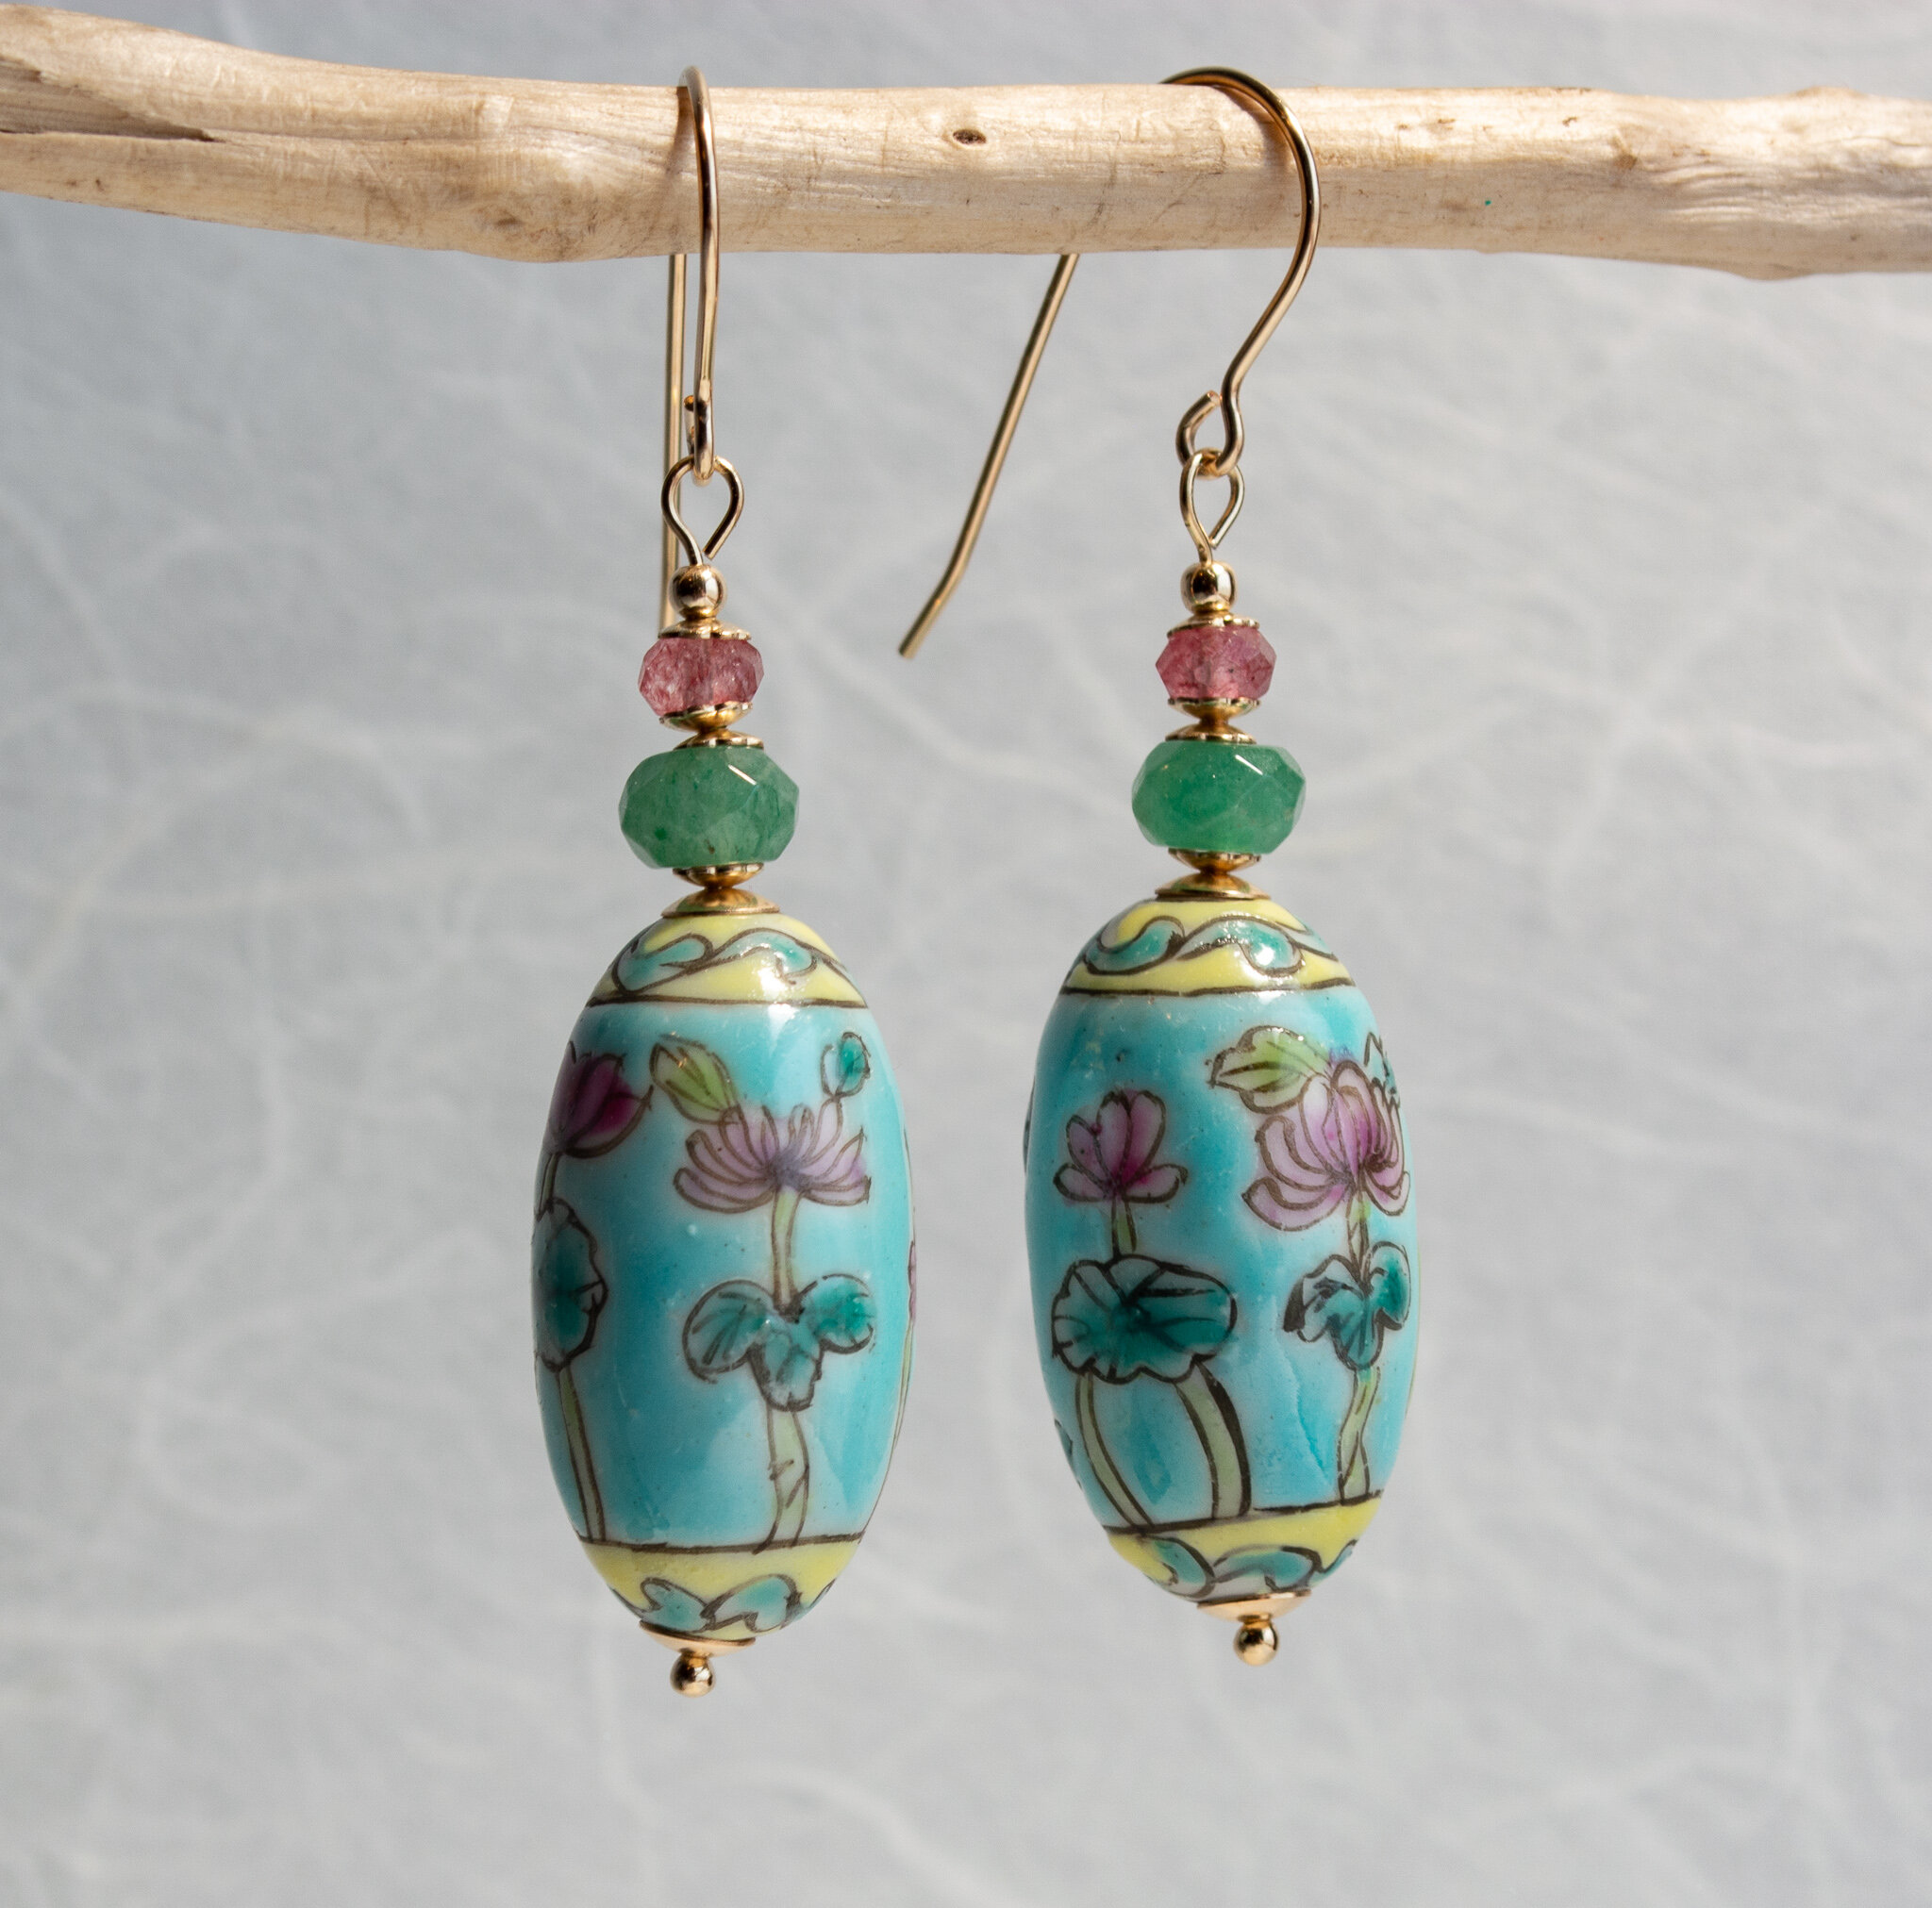 handcrafted ceramic beads cross shaped earrings findings filigree porcelain pendants Bohemian ceramic charms